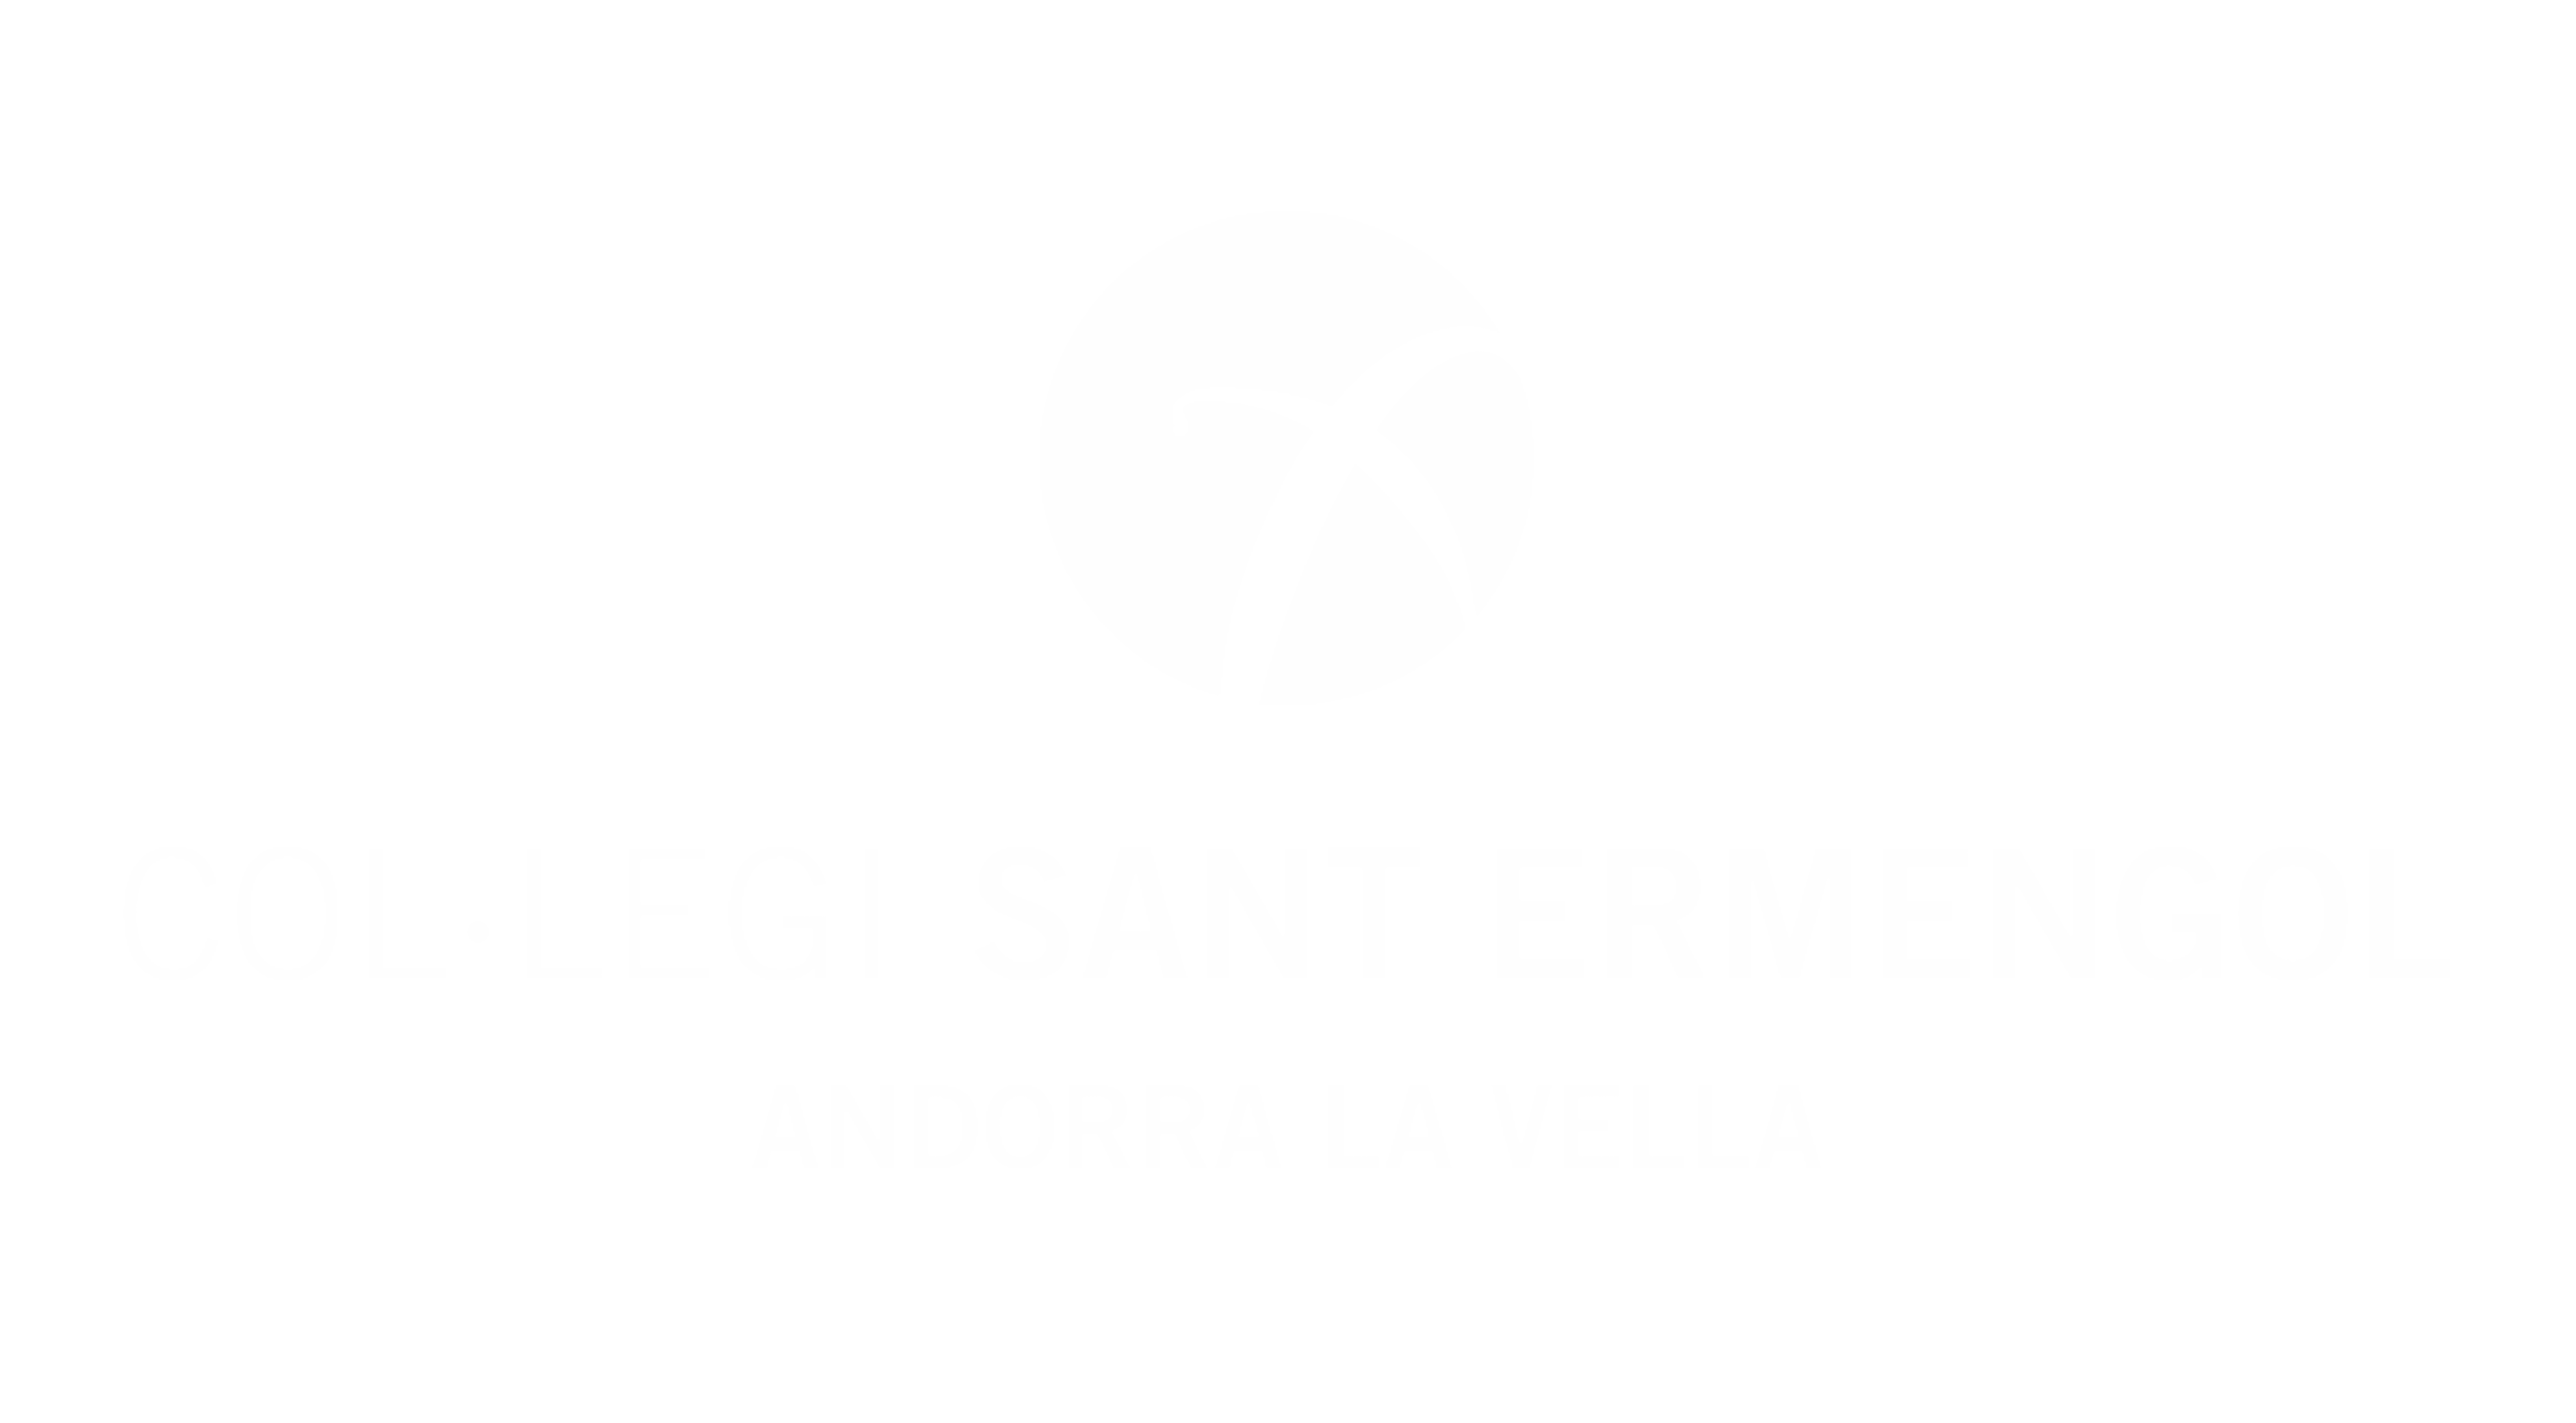 Col·legi Sant Ermengol